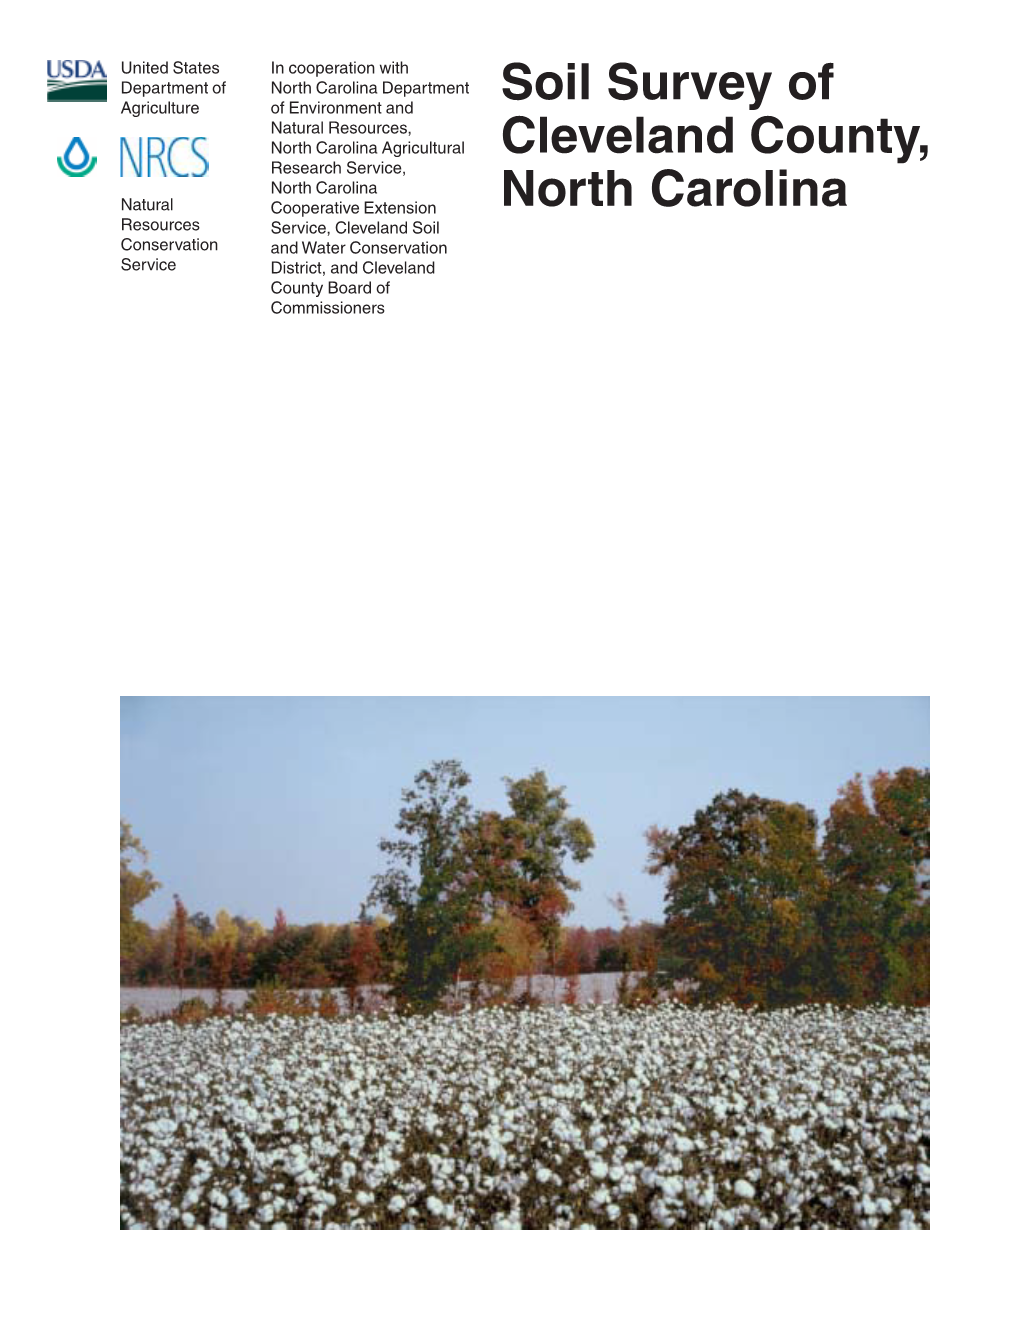 Soil Survey of Cleveland County, North Carolina